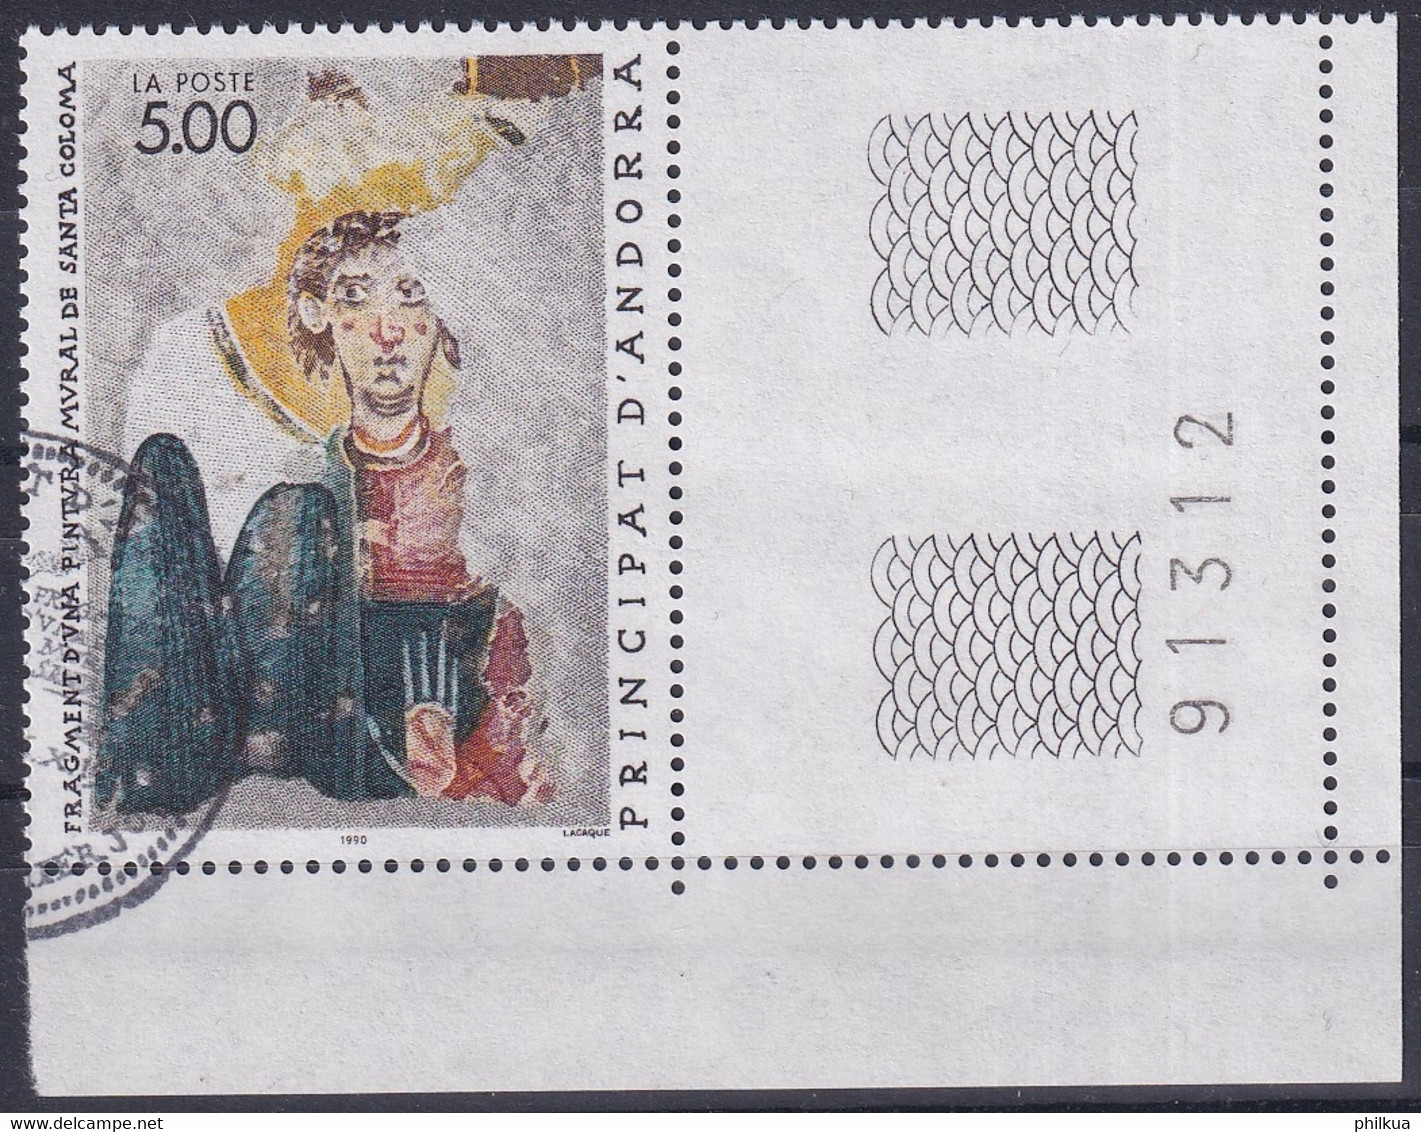 MiNr. 417 Andorra Französische Post1990, 6. Okt. Religiöse Kunst - Used Stamps